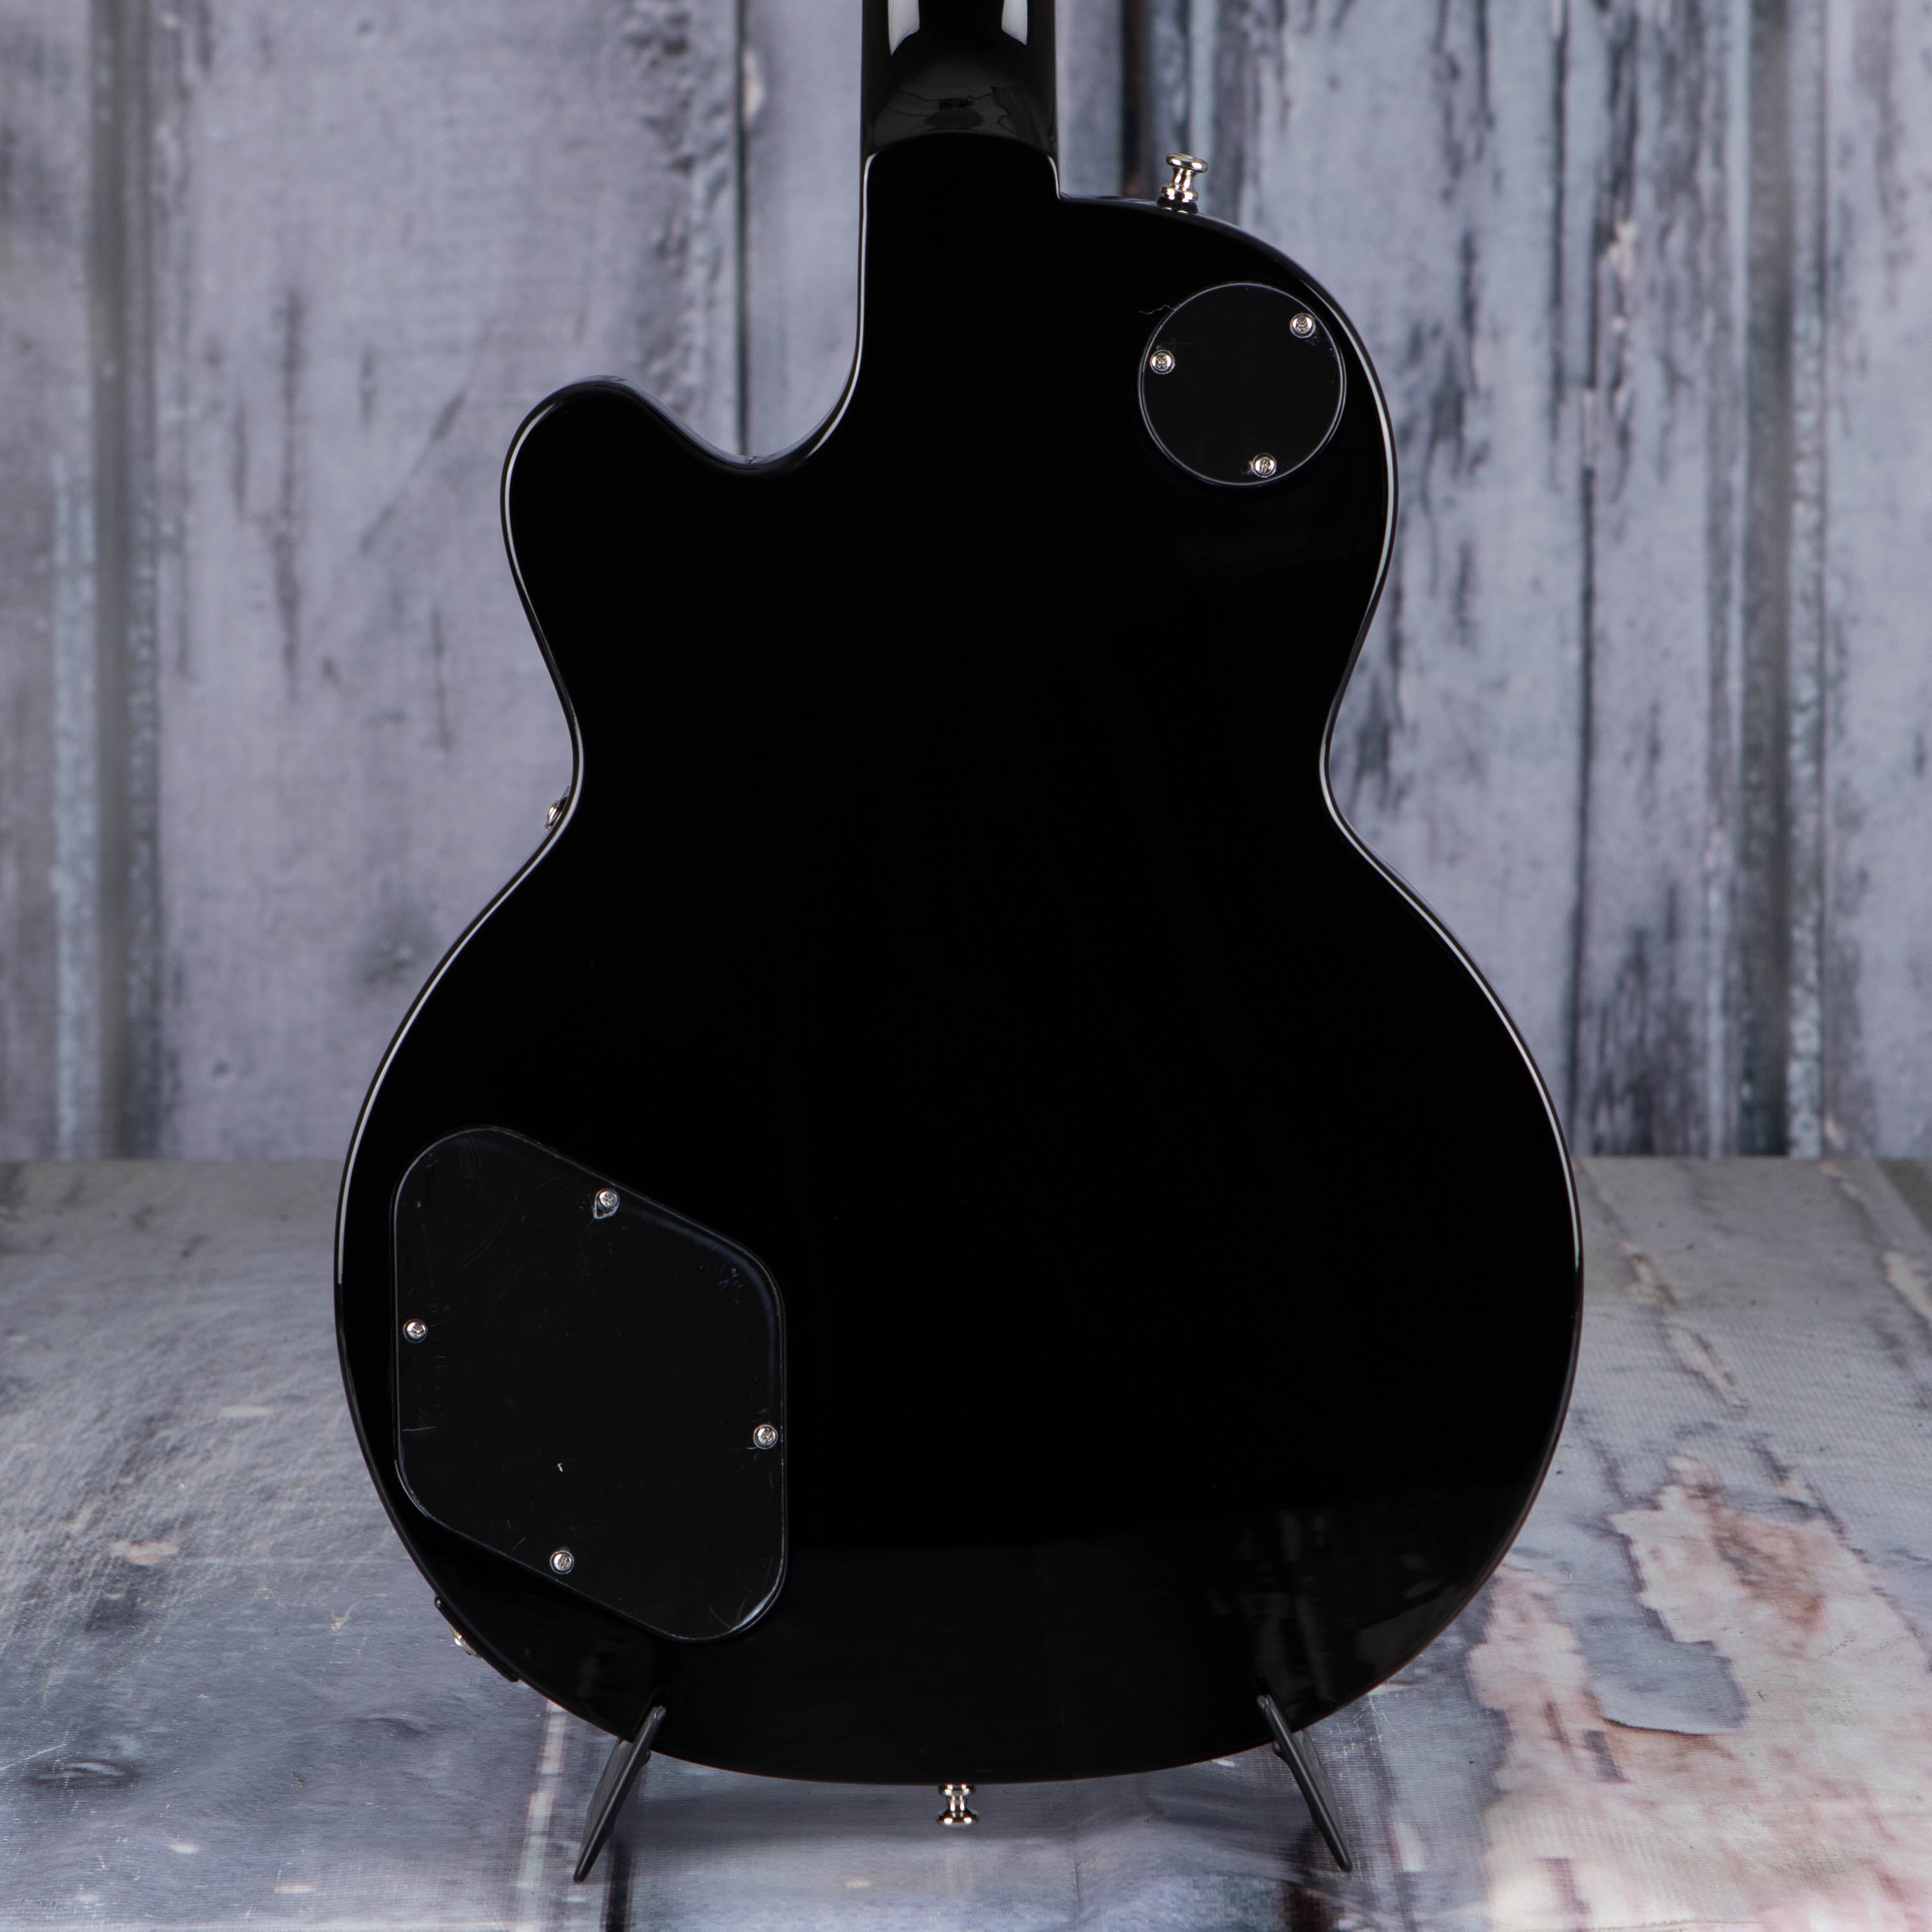 Guild Bluesbird Electric Guitar, Black, back closeup